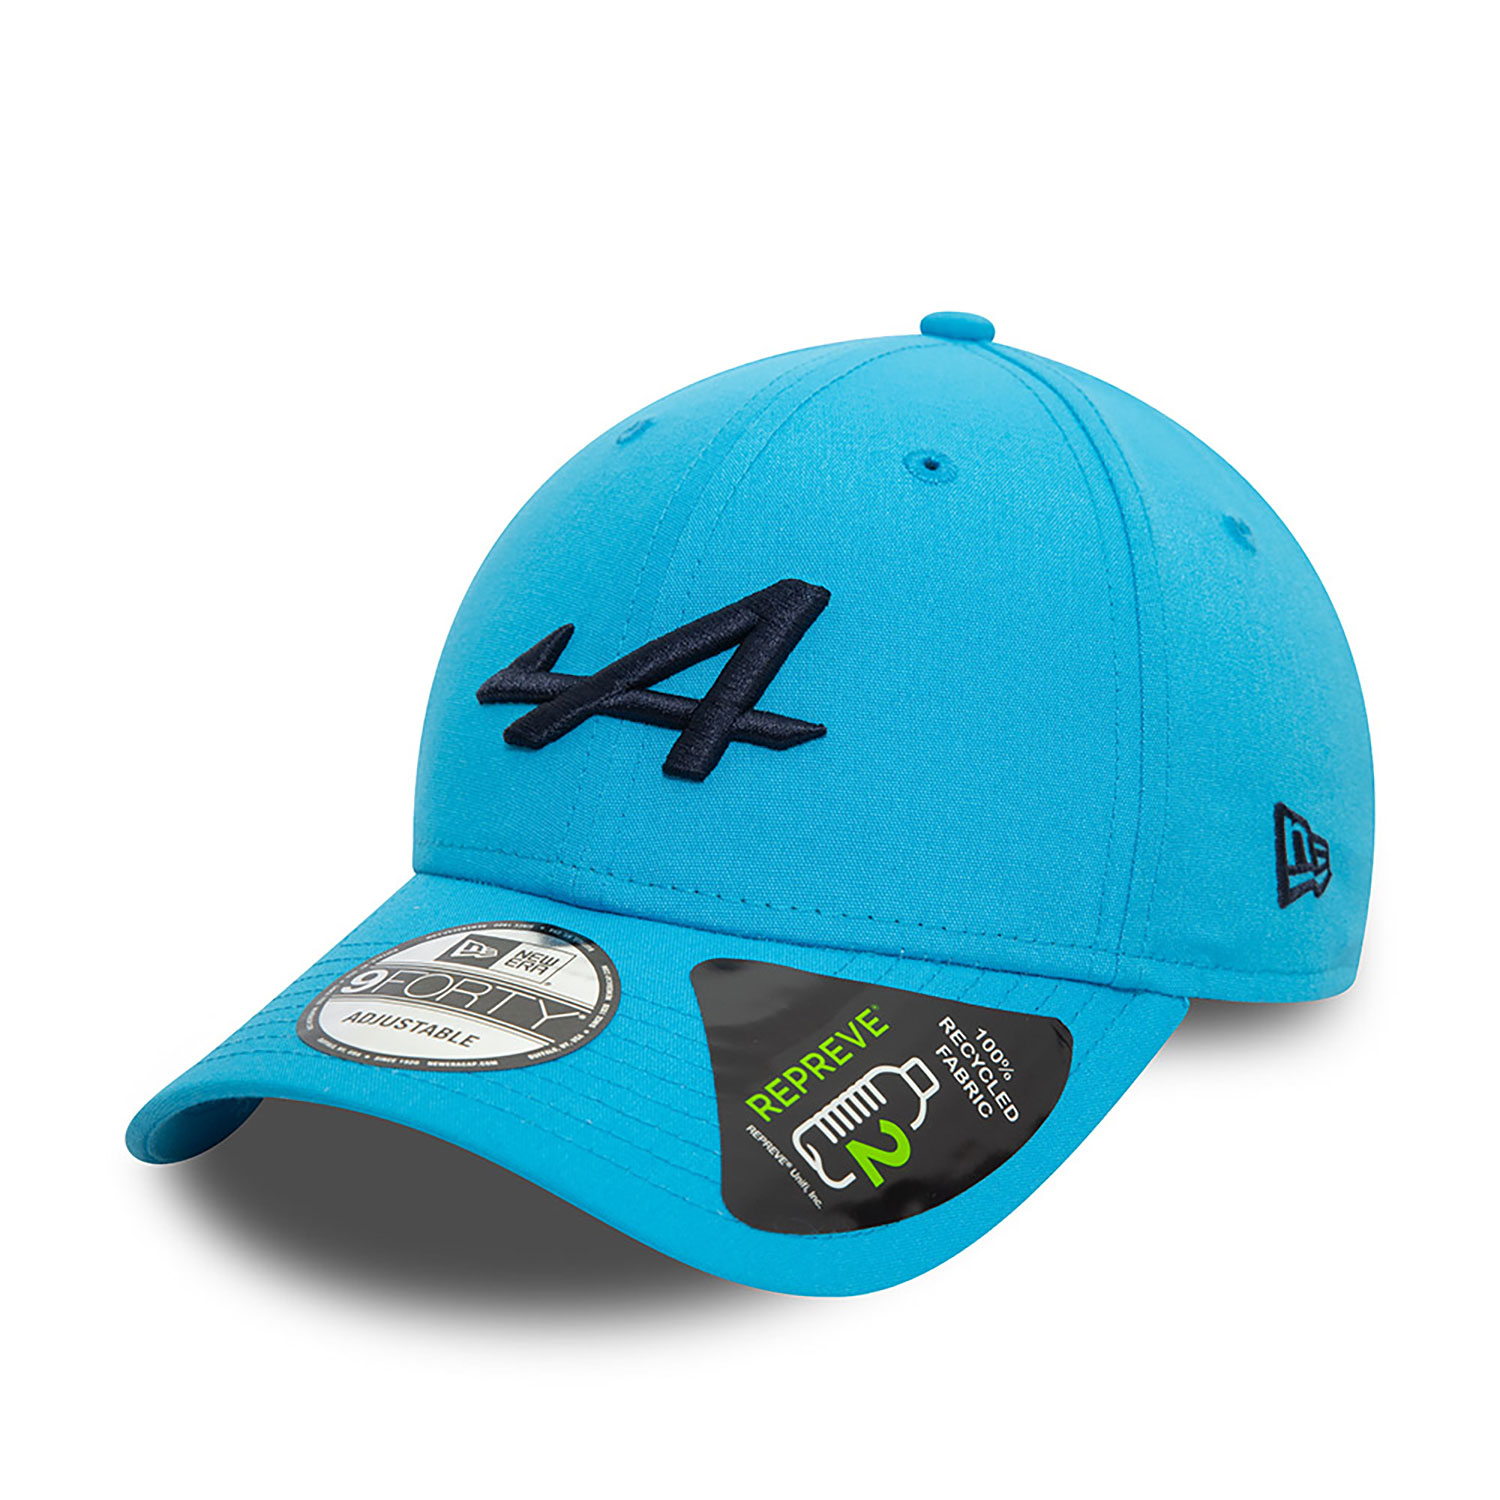 Alpine Racing Repreve Blue 9FORTY Adjustable Cap